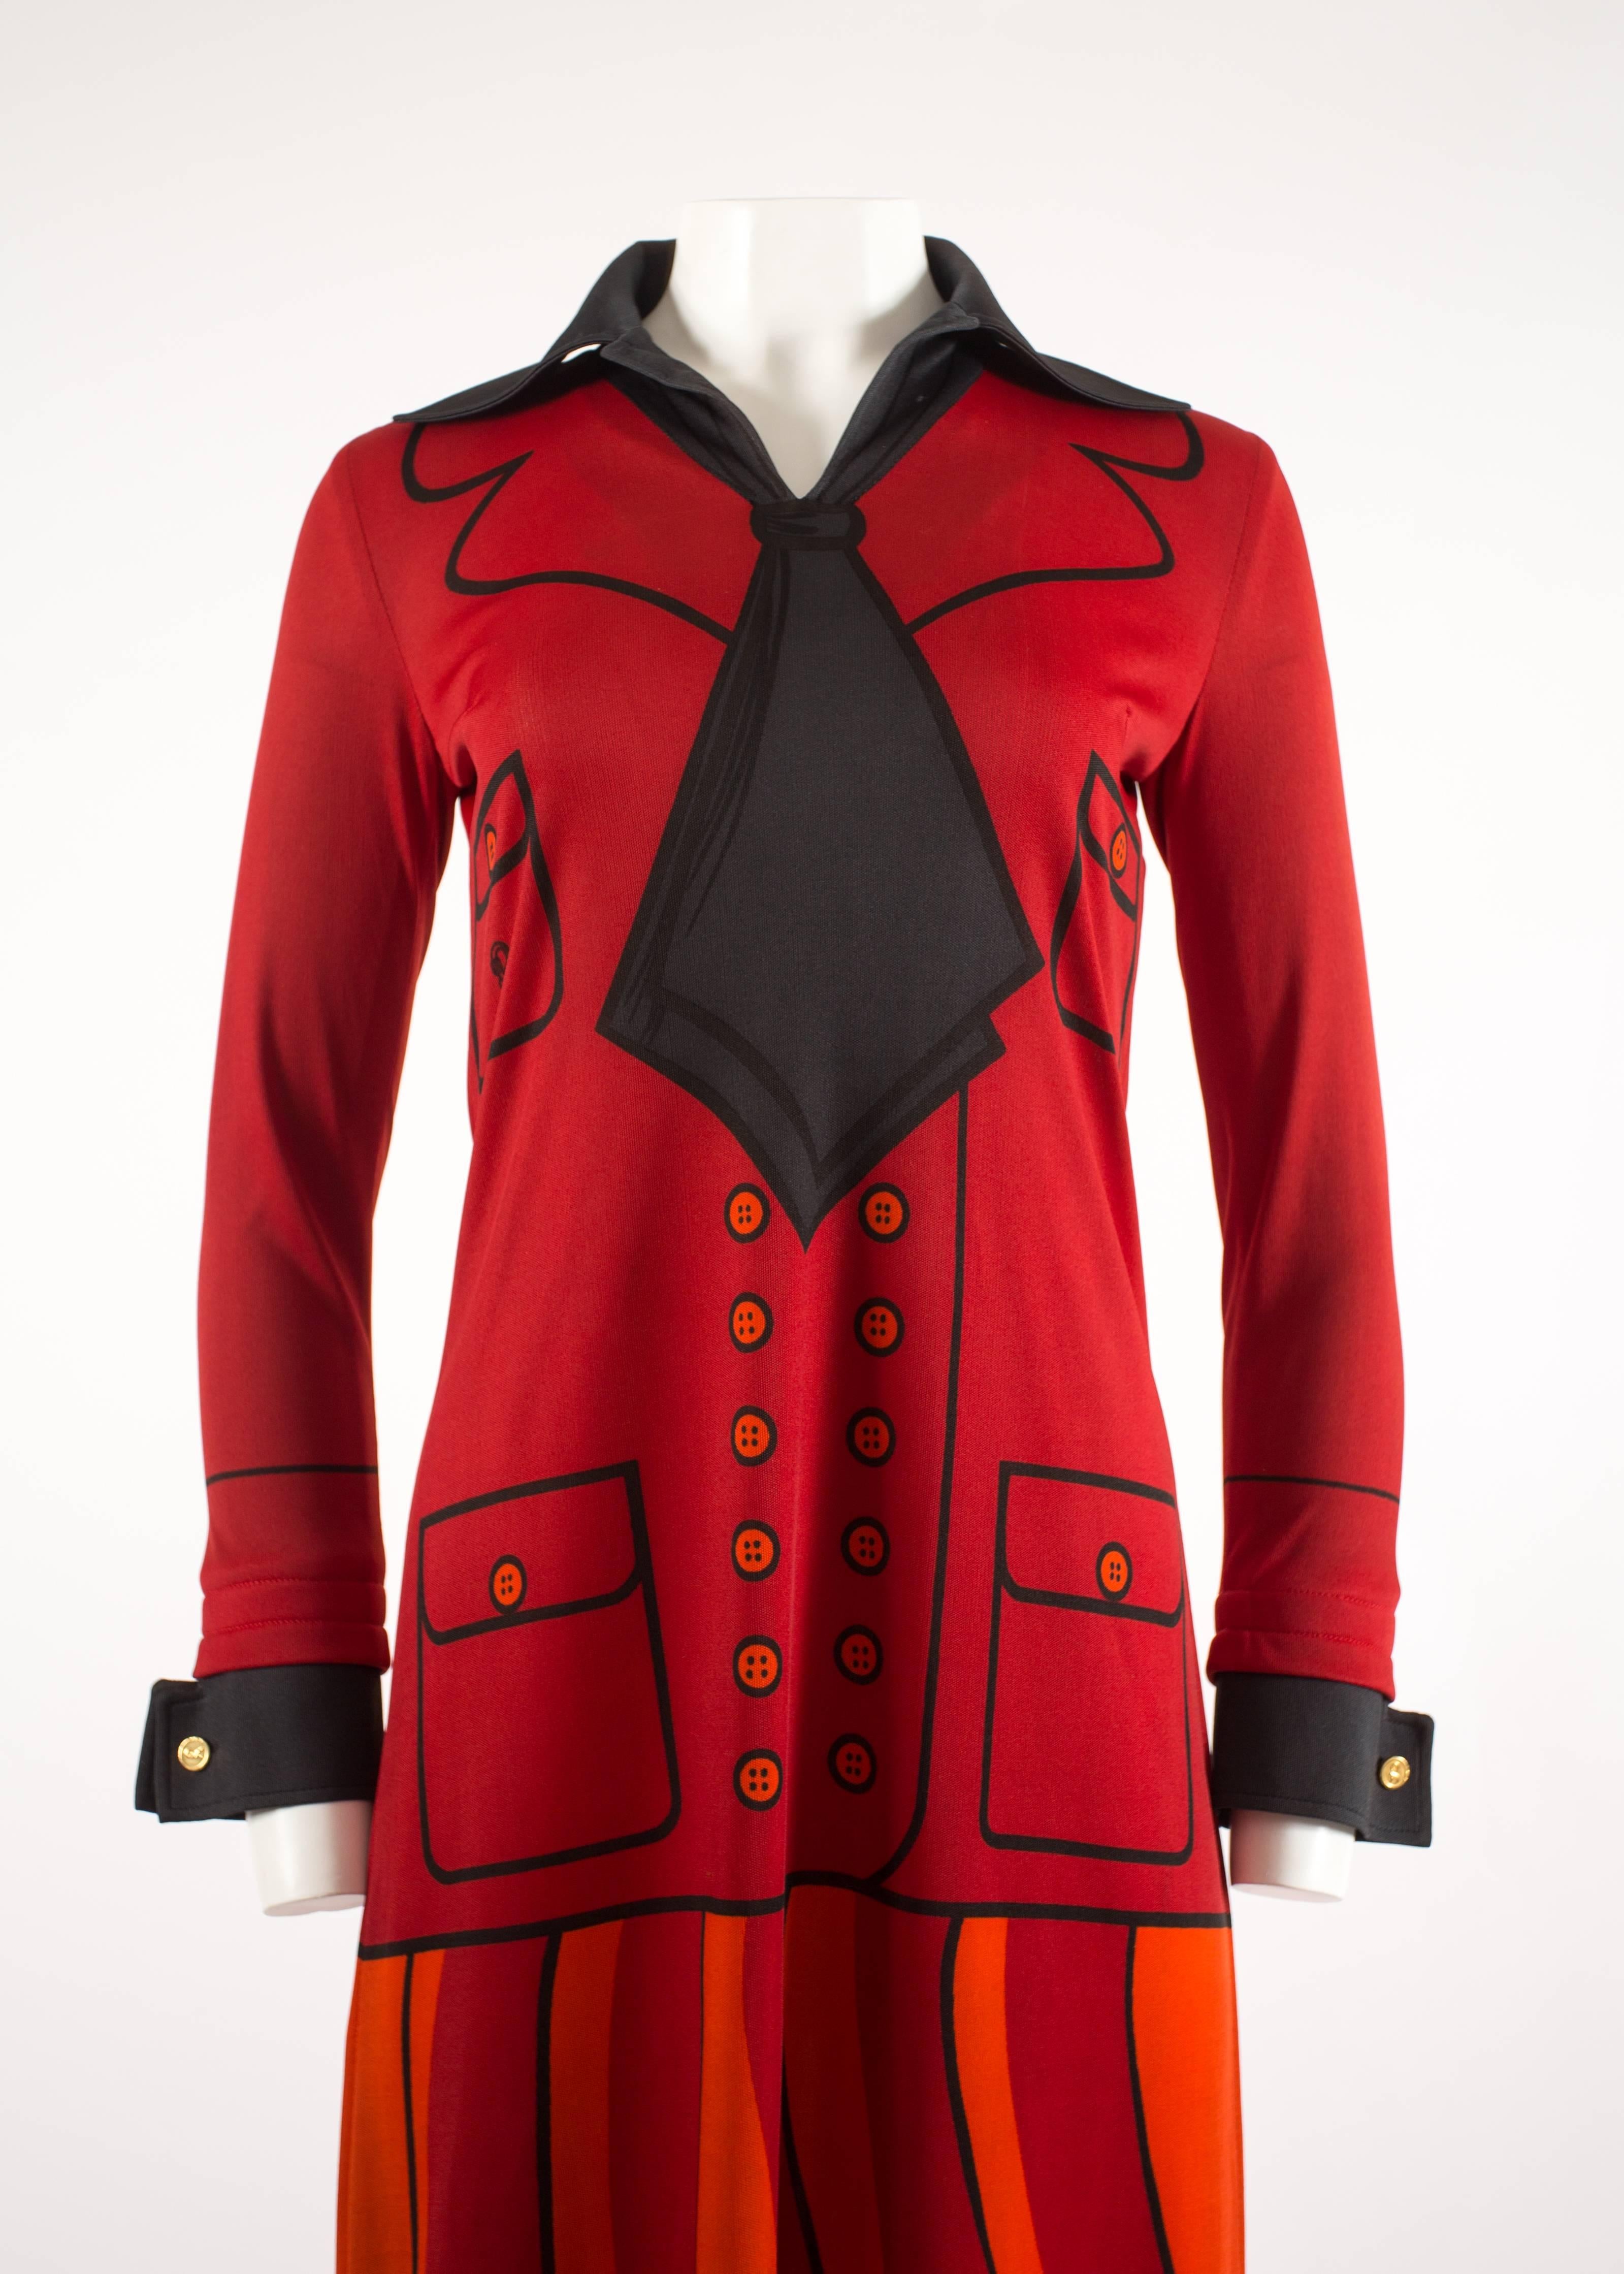 Red Roberta di Camerino 1973 jersey faux suit print maxi dress